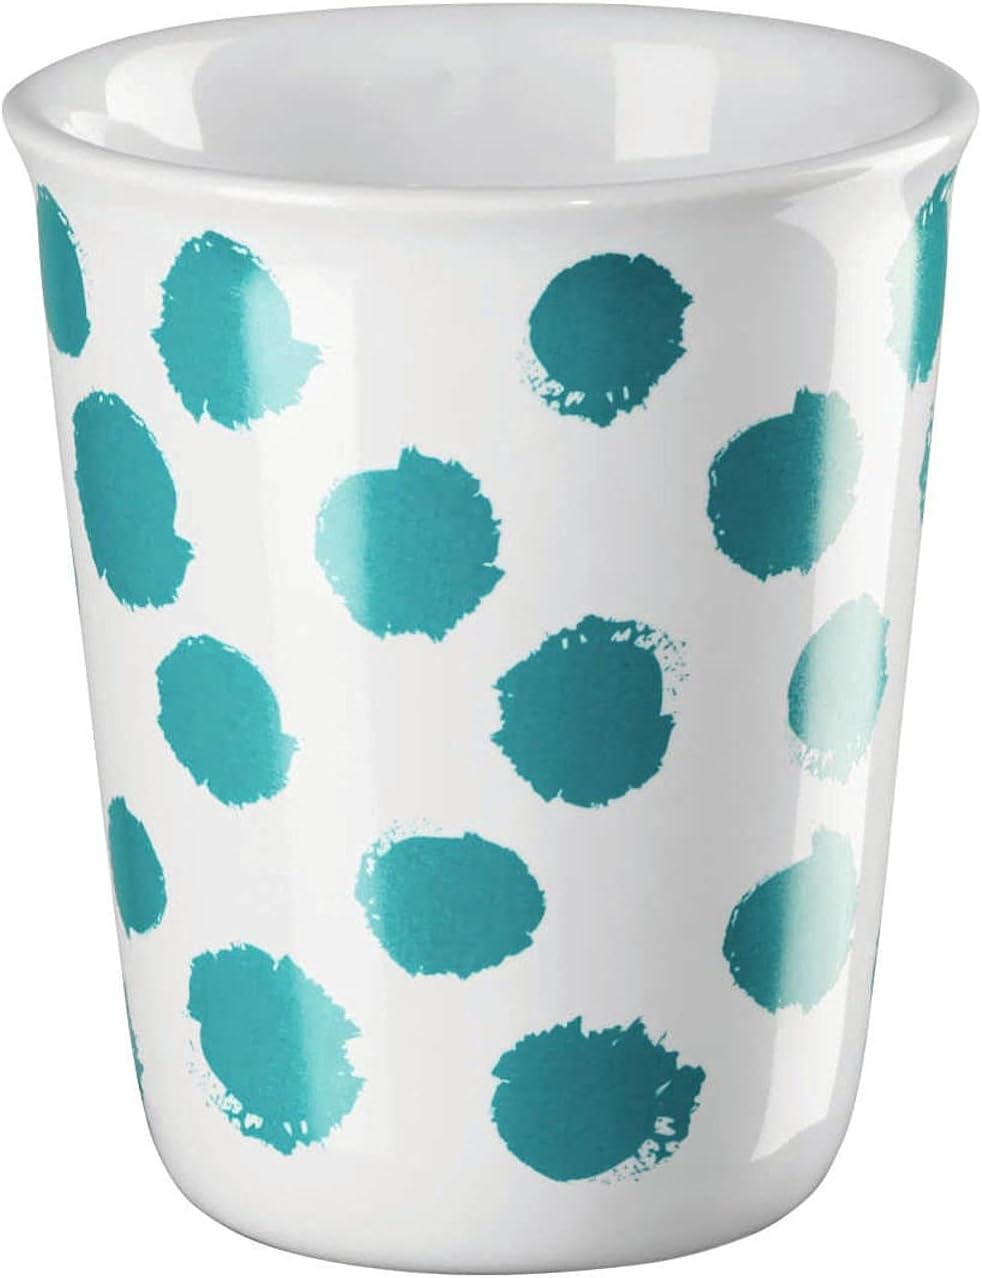 ASA - Espresso cup - white / turquoise / polka dots - porcelain - diameter 6.5 cm x height 7 cm - capacity: 0.1 l.